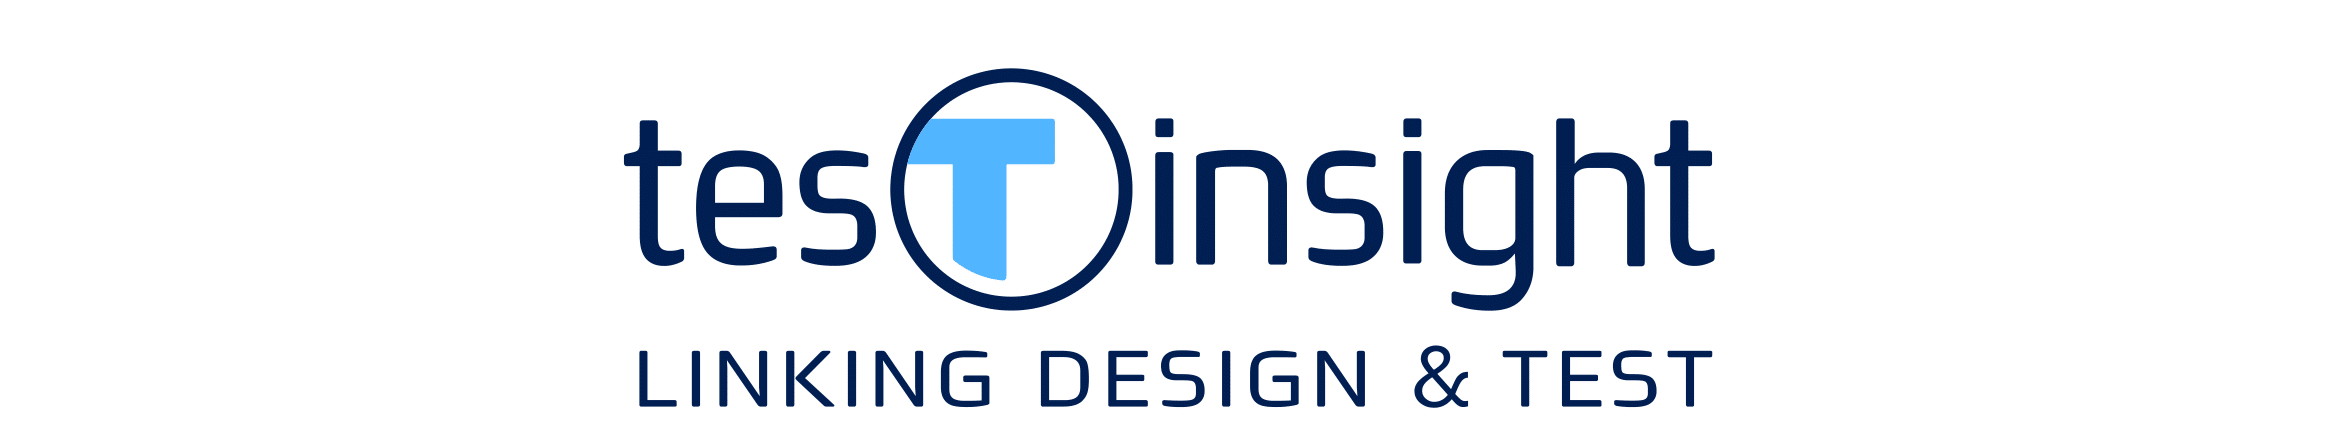 TestInsight Logo - new-1